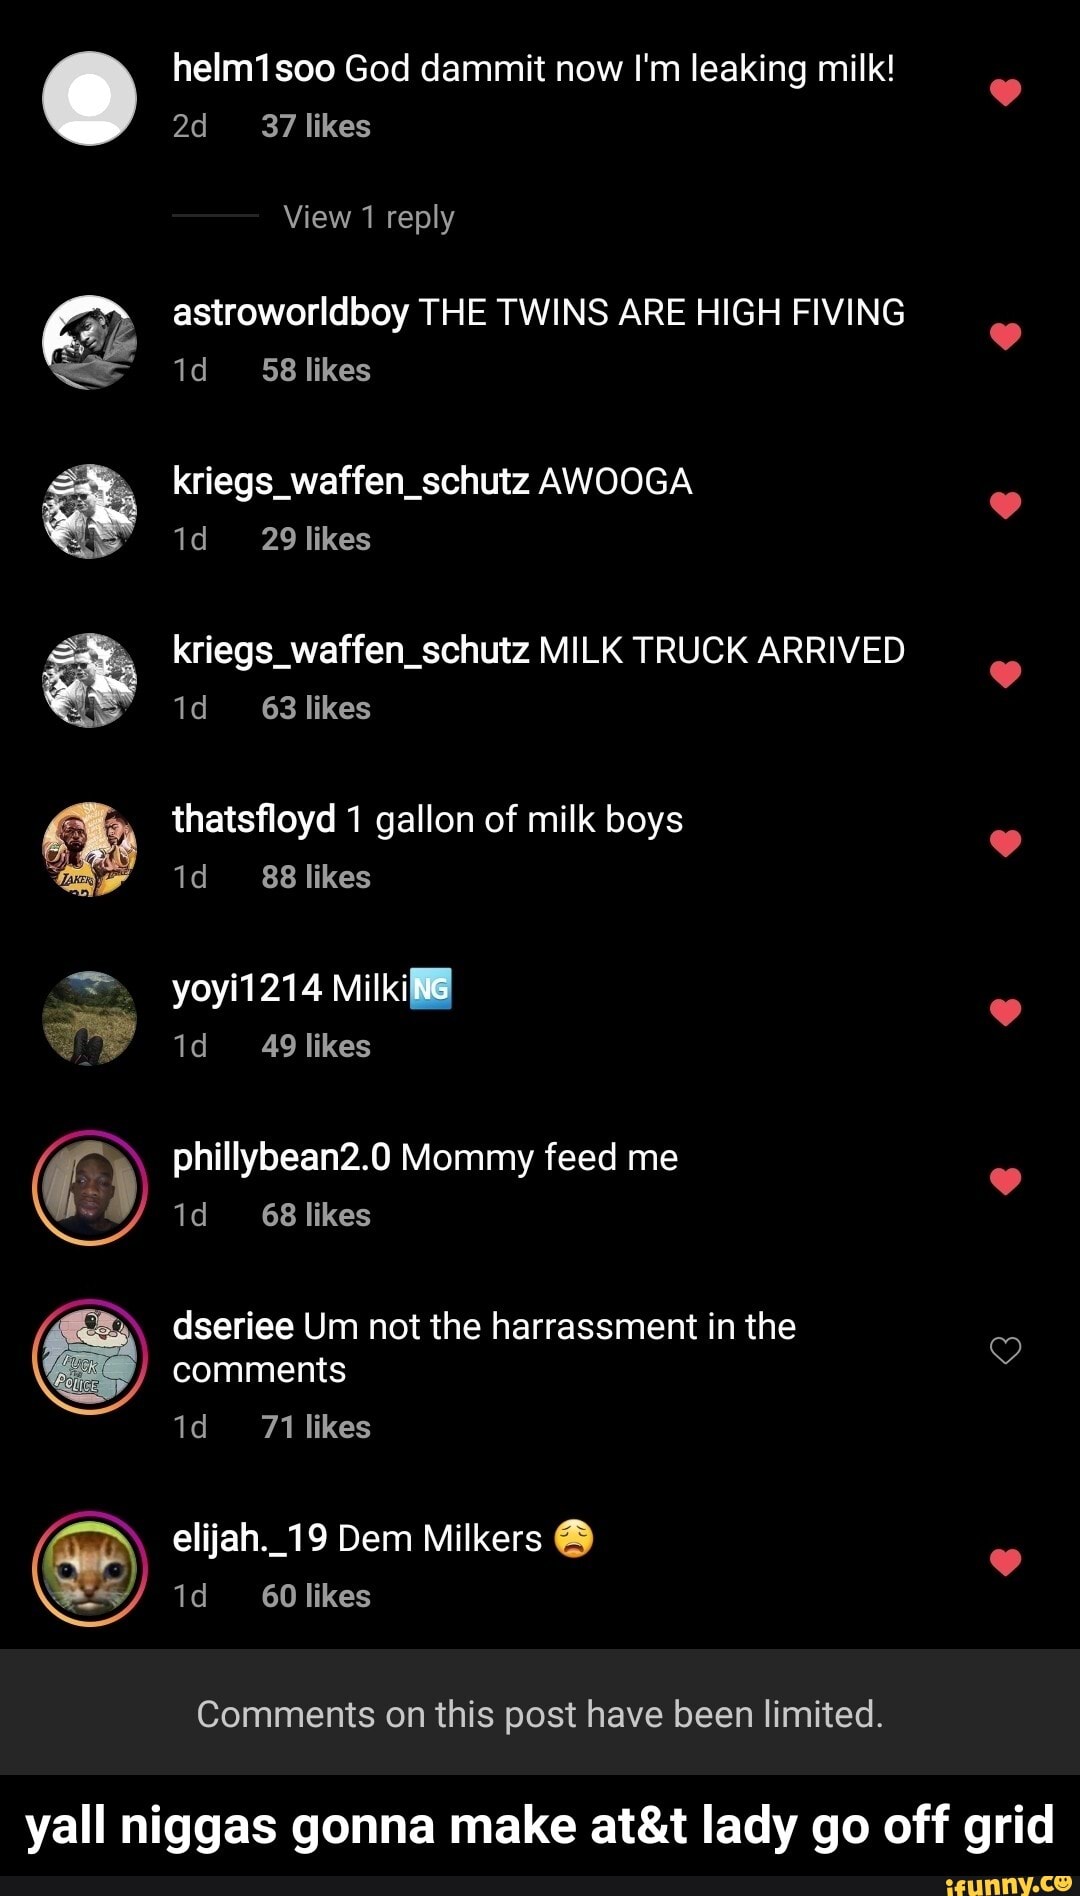 Milk truck has arrived